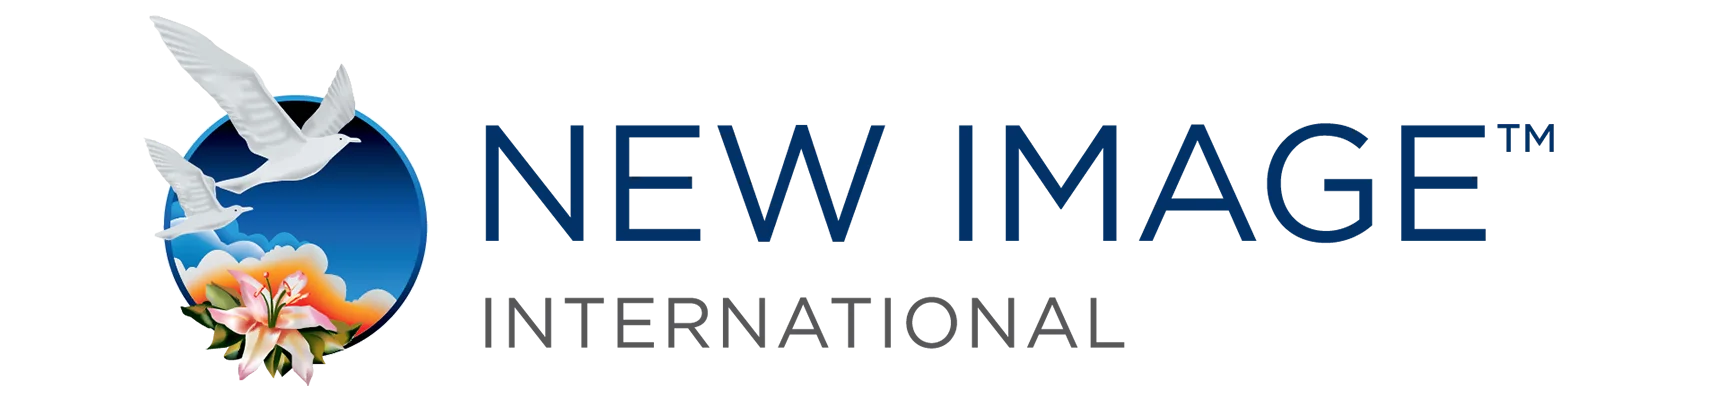 New Image Group Company logo